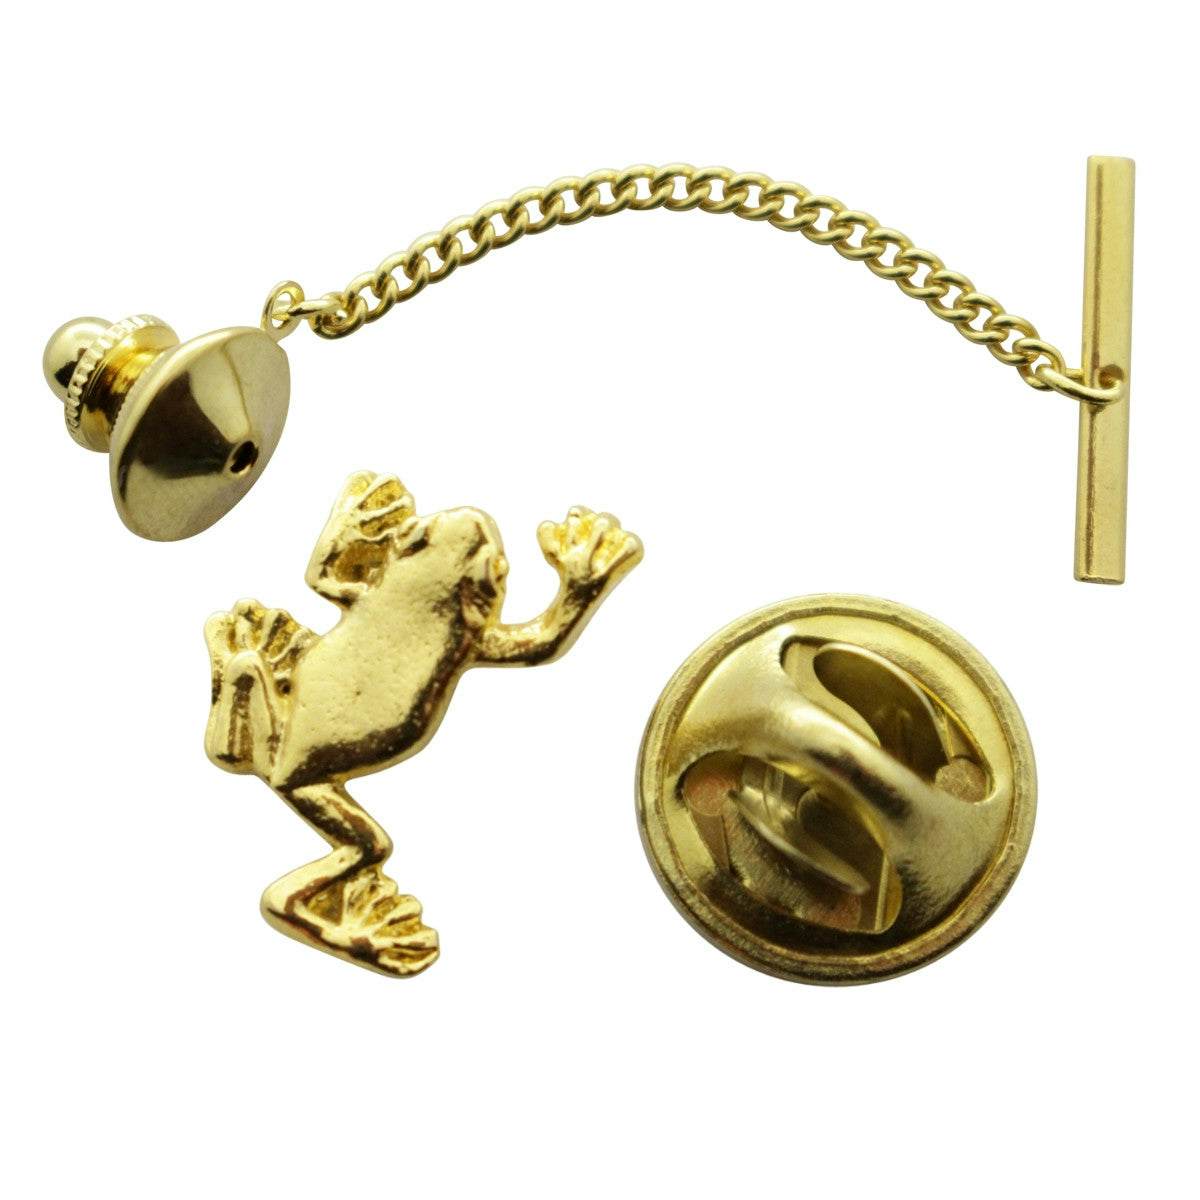 Snook Tie Tack ~ 24K Gold ~ Tie Tack or Pin ~ Sarahs Treats & Treasures